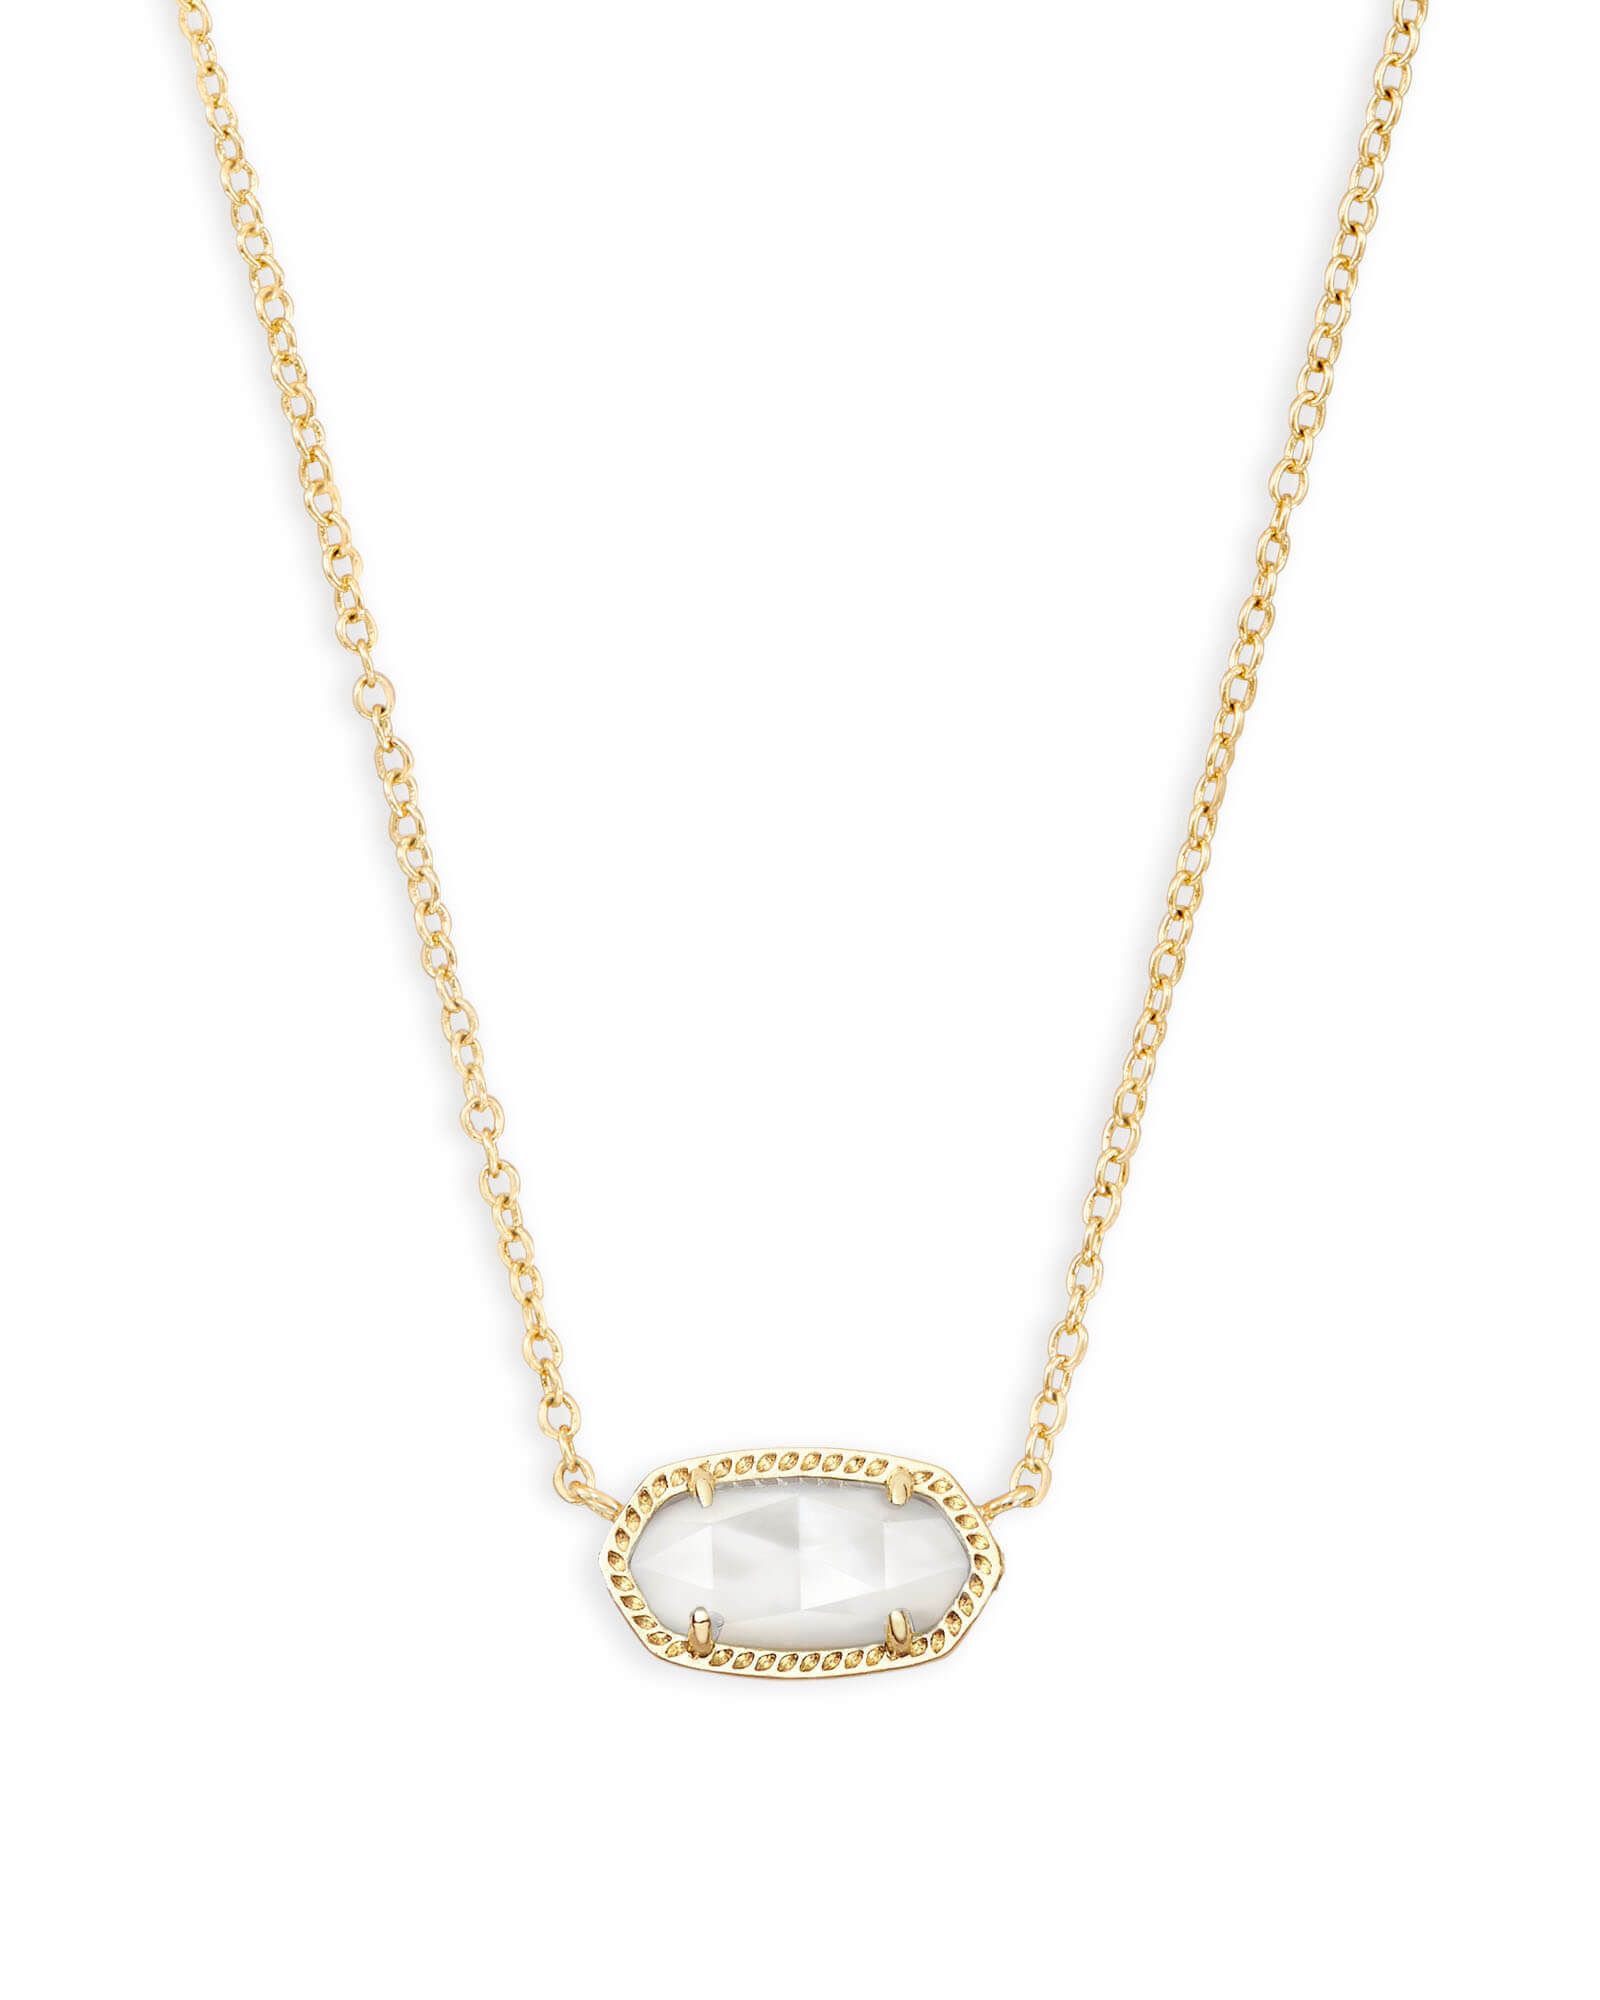 Elisa Gold Pendant Necklace in Ivory Pearl | Kendra Scott | Kendra Scott